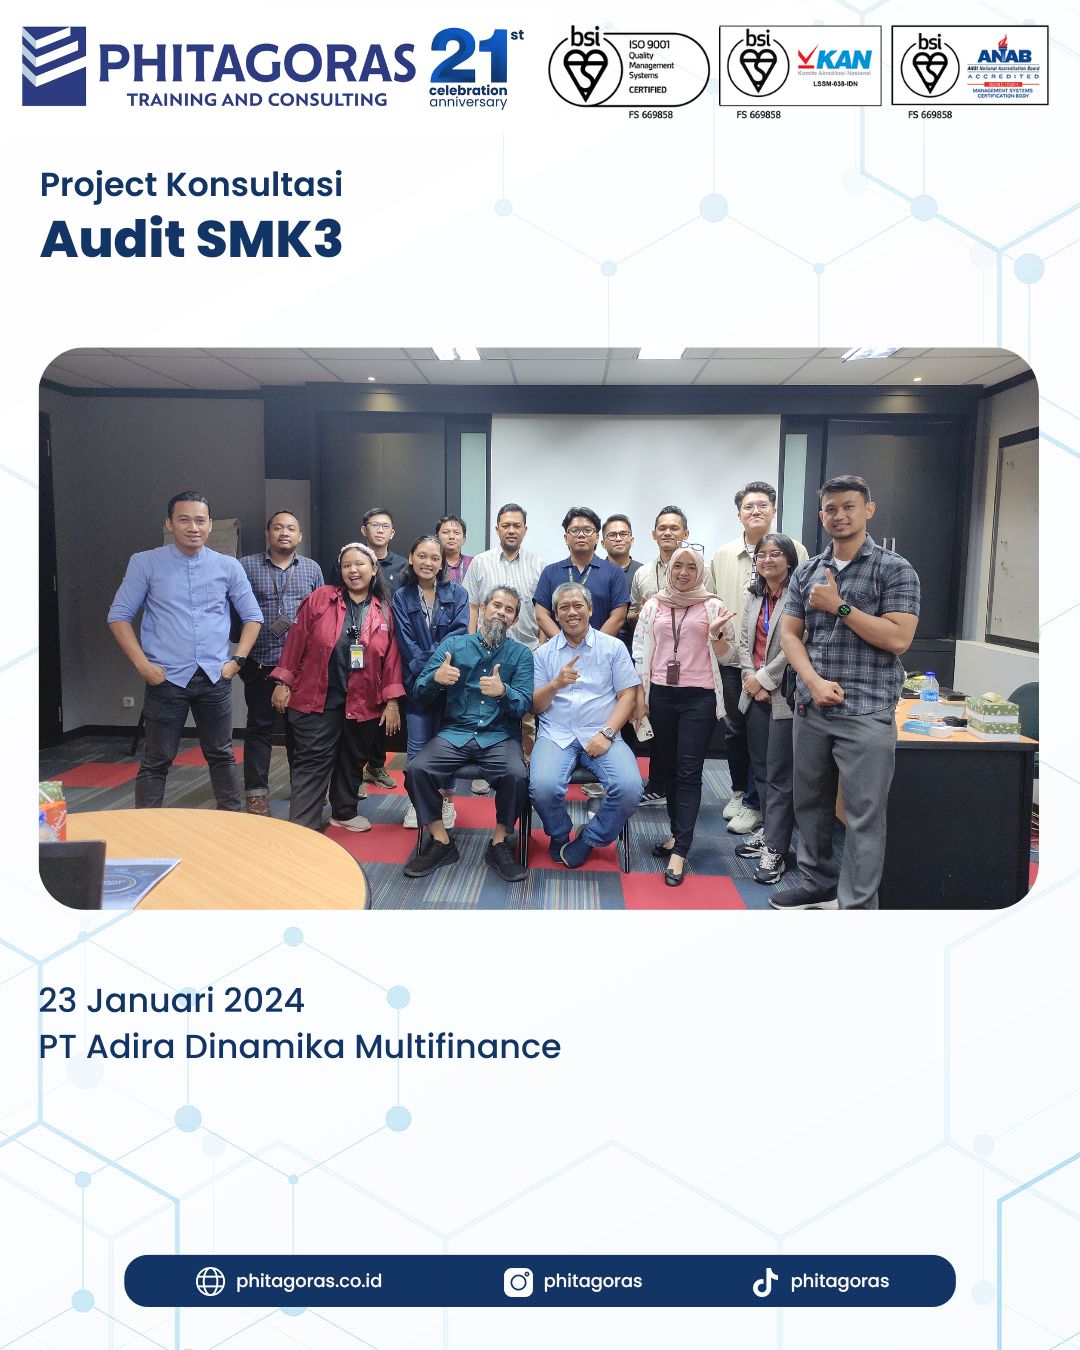 Project Consultation Audit SMK3 - PT Adira Dinamika Multifinance